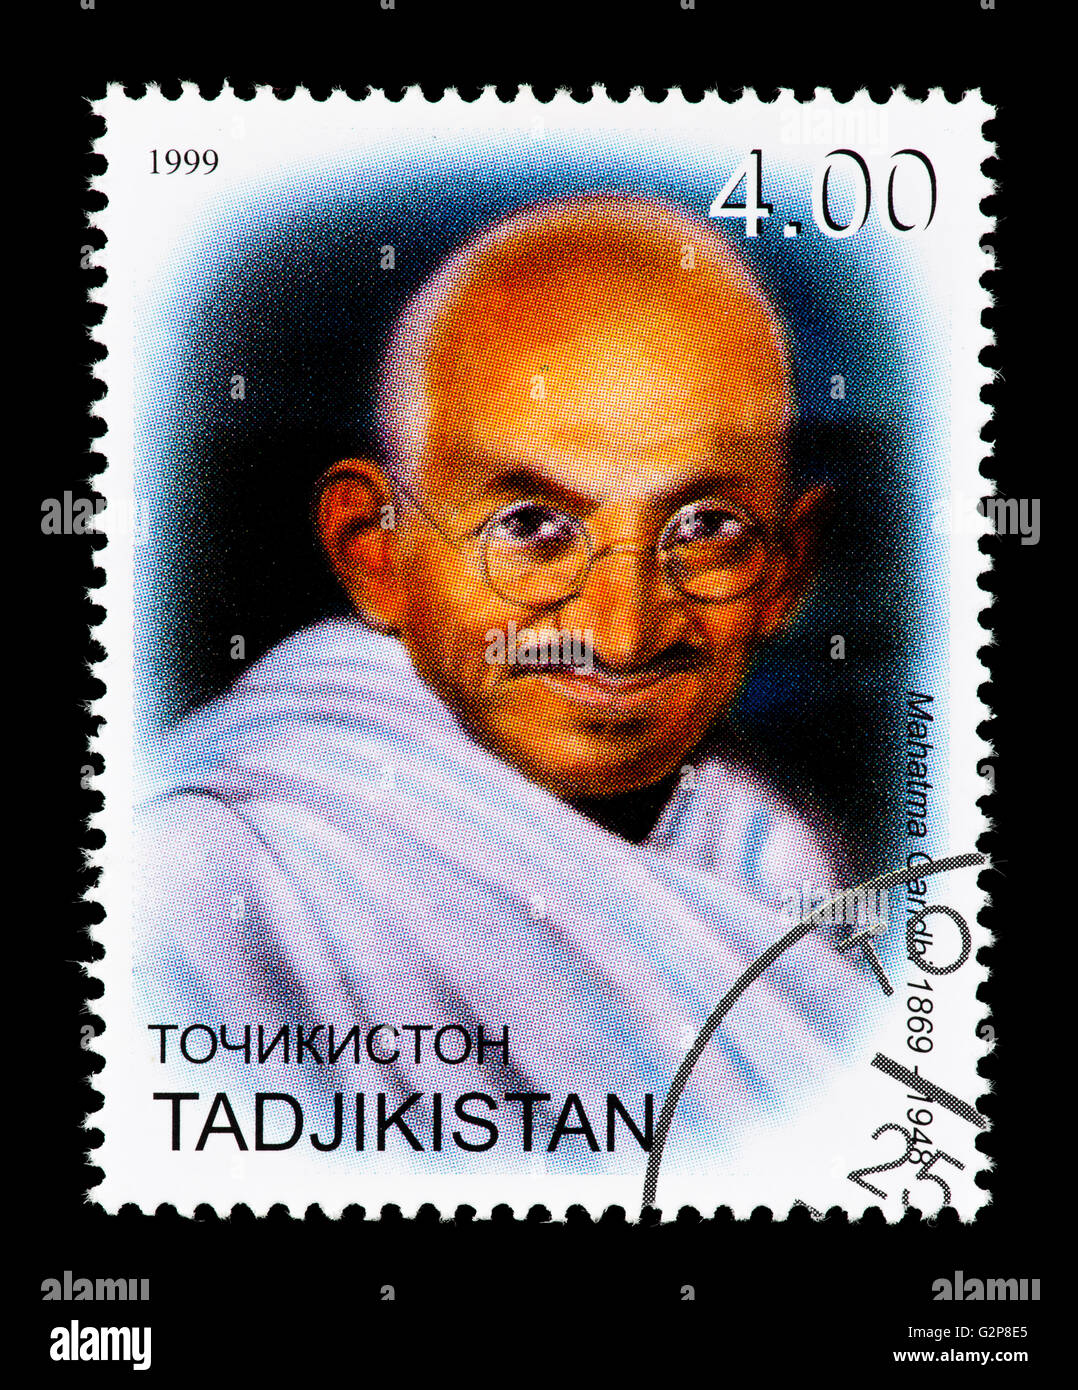 Postage stamp from Tajikistan depicting Mohandas Karamchand Gandhi, Indian independence movement leader. Stock Photo